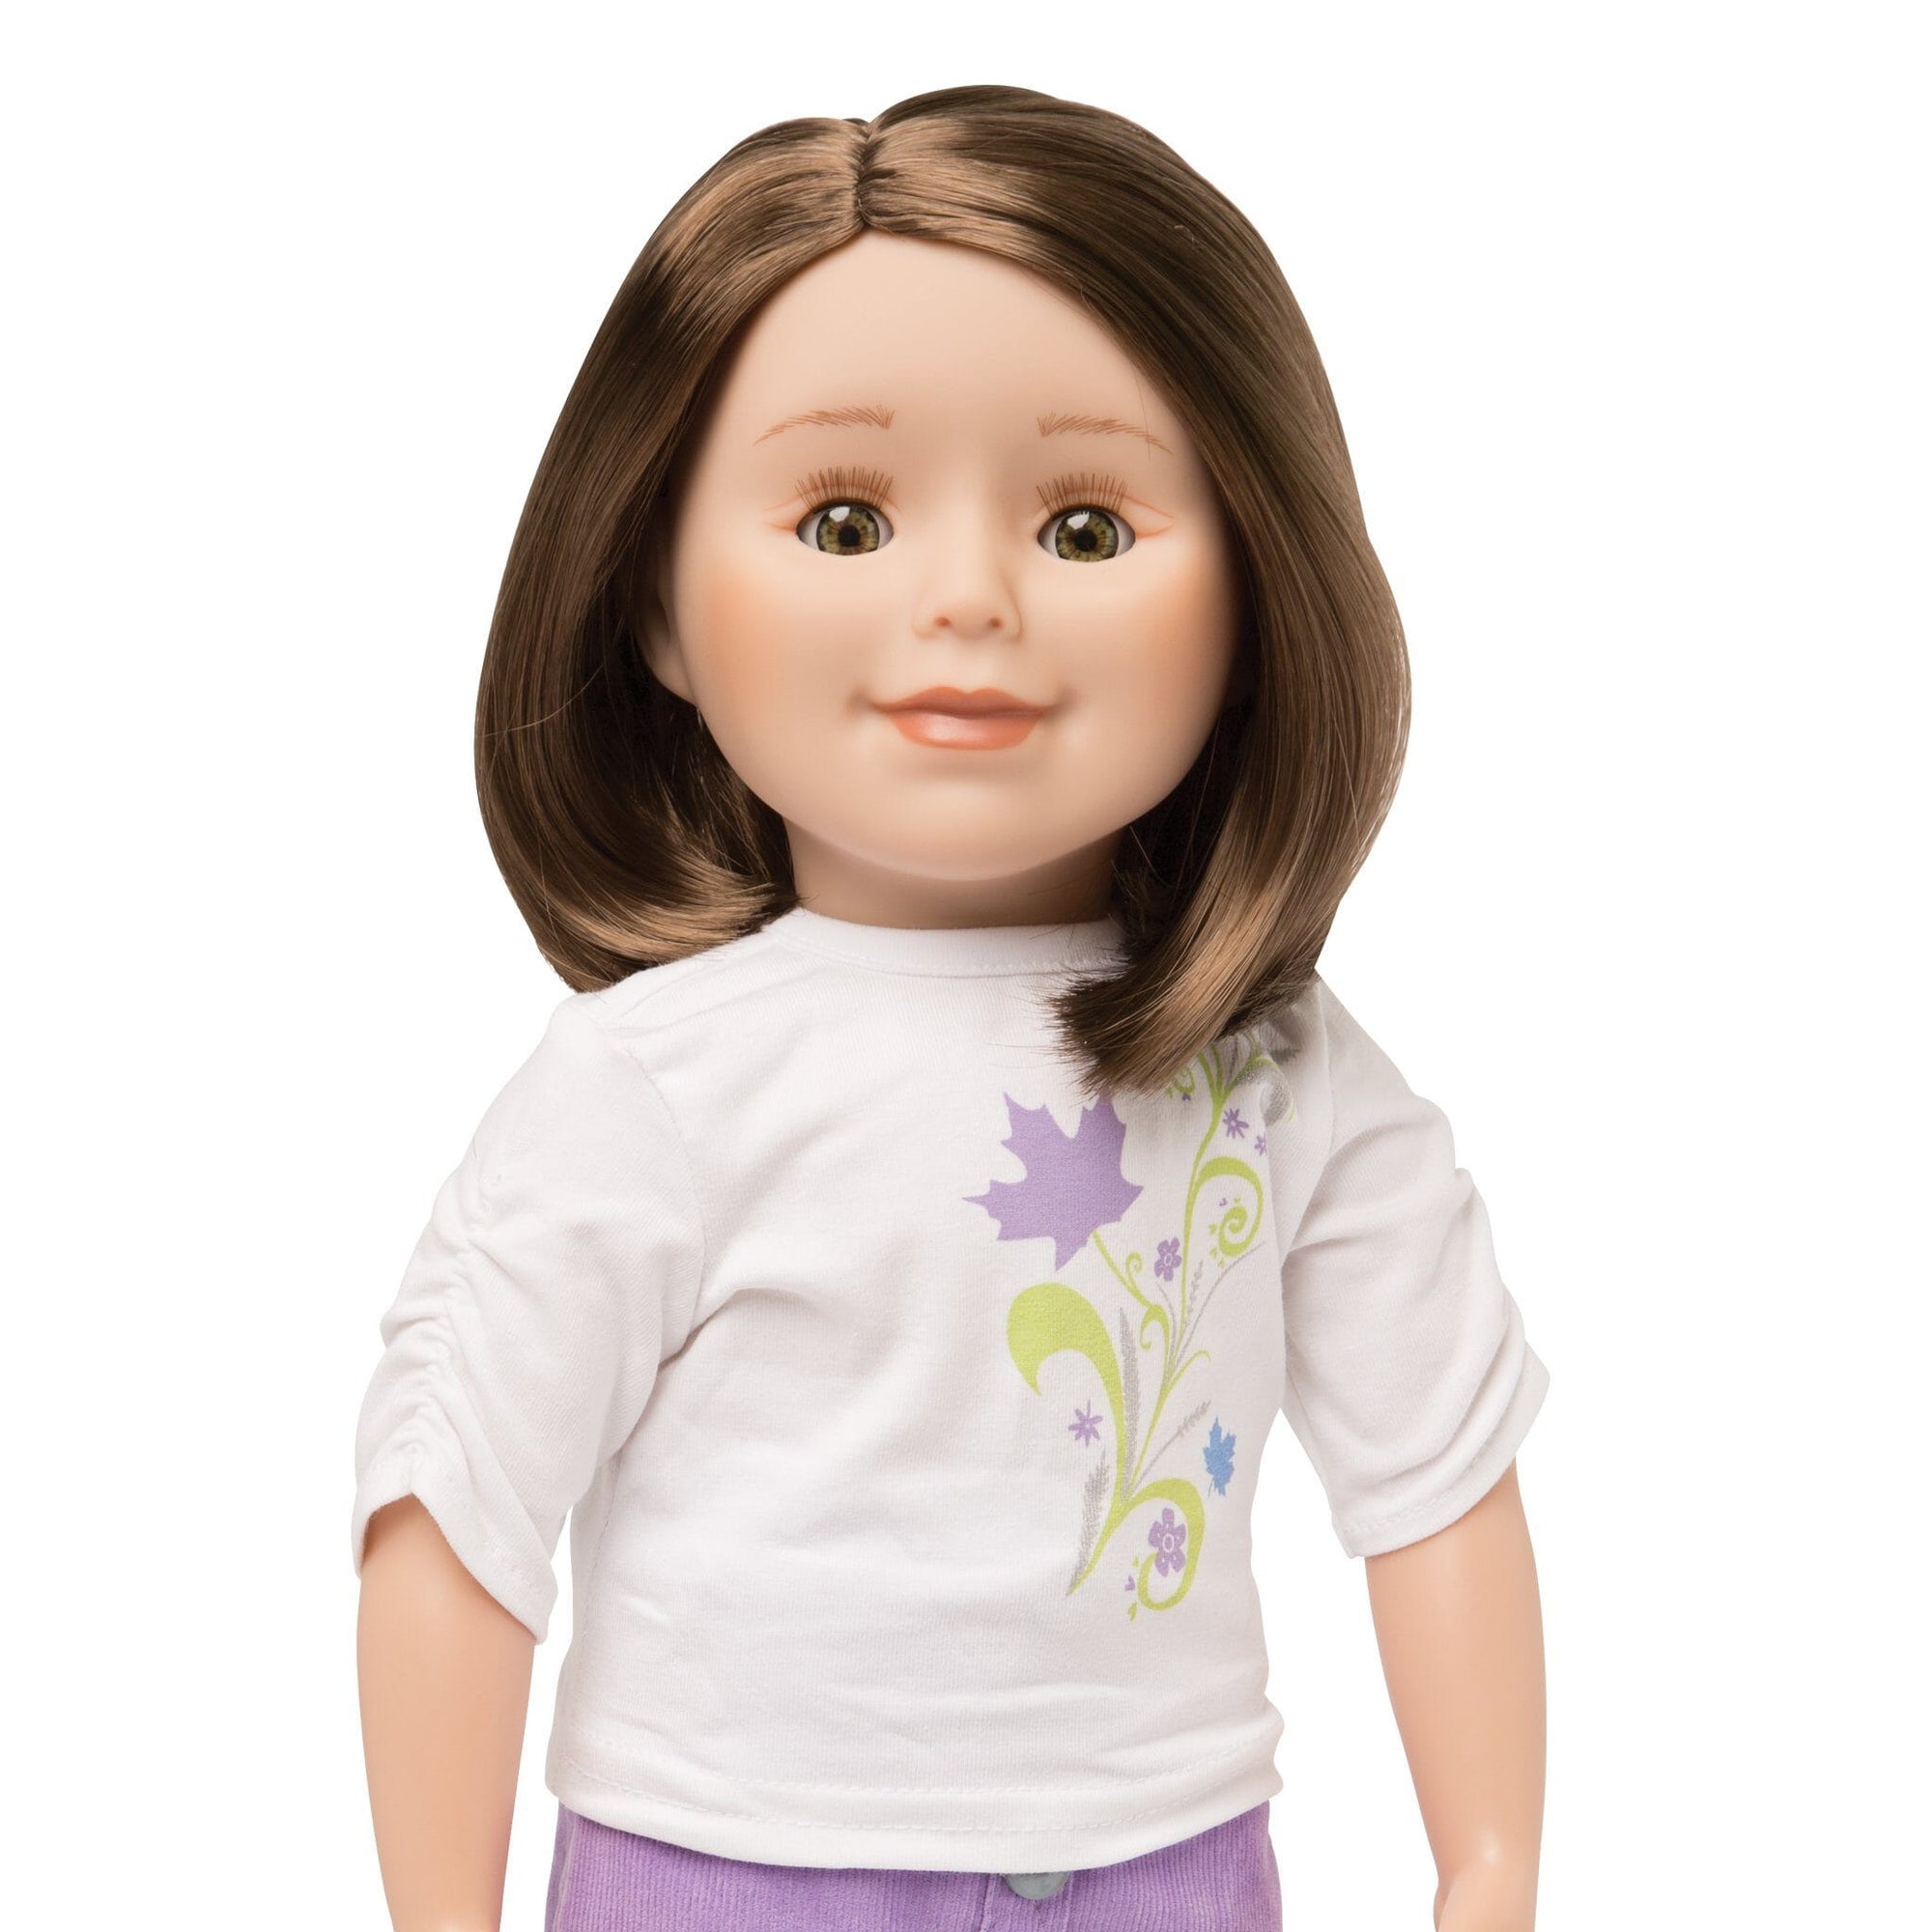 KMF26 Maplelea Friend 18 inch doll with shoulder length brown hair, light skin, hazel eyes